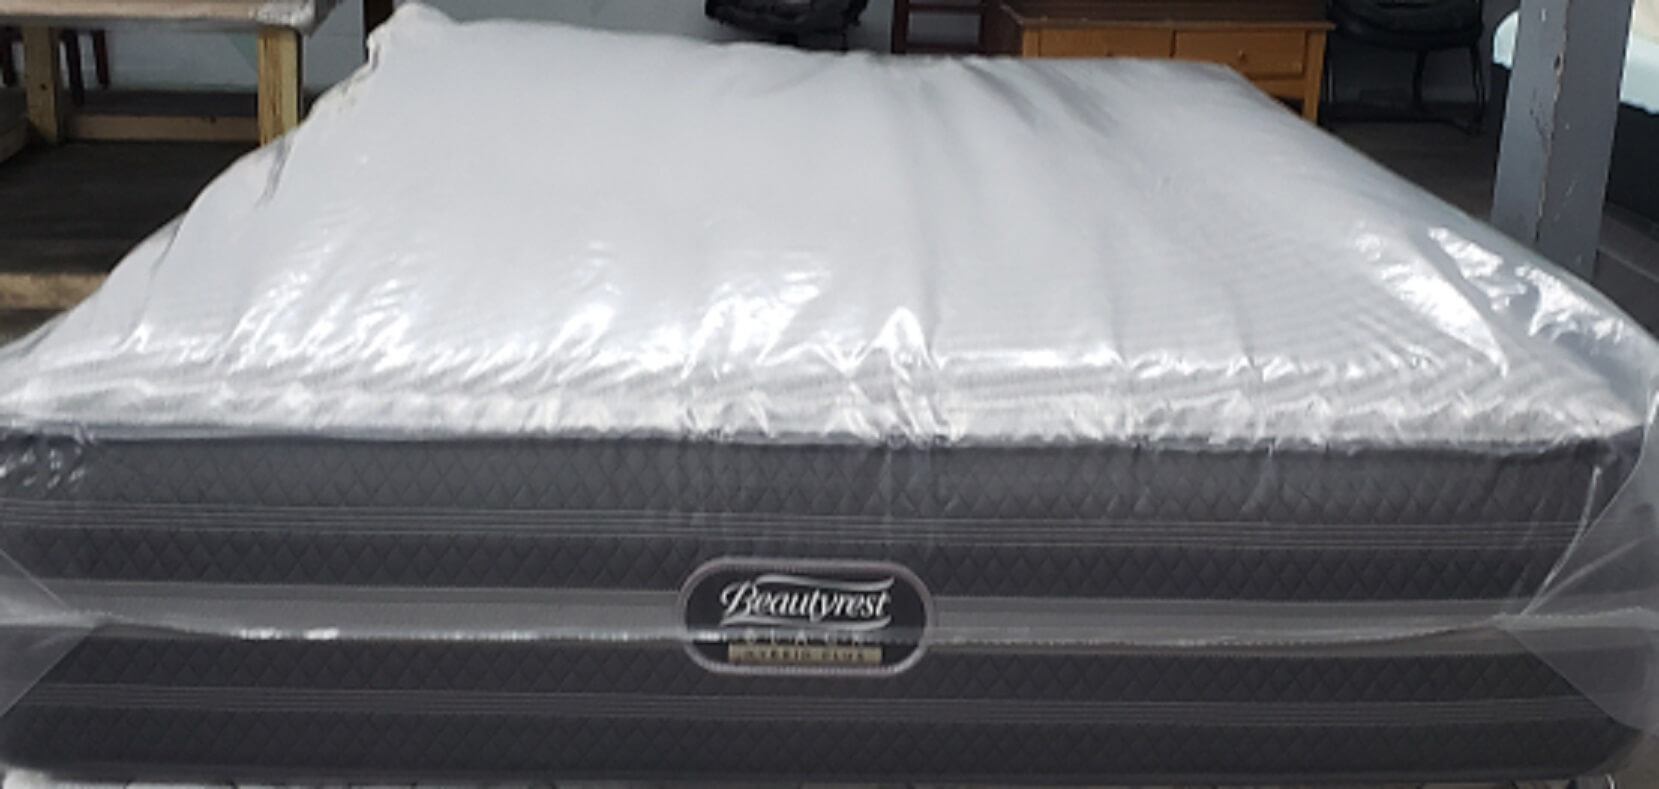 beautyrest jennings black hybrid mattress